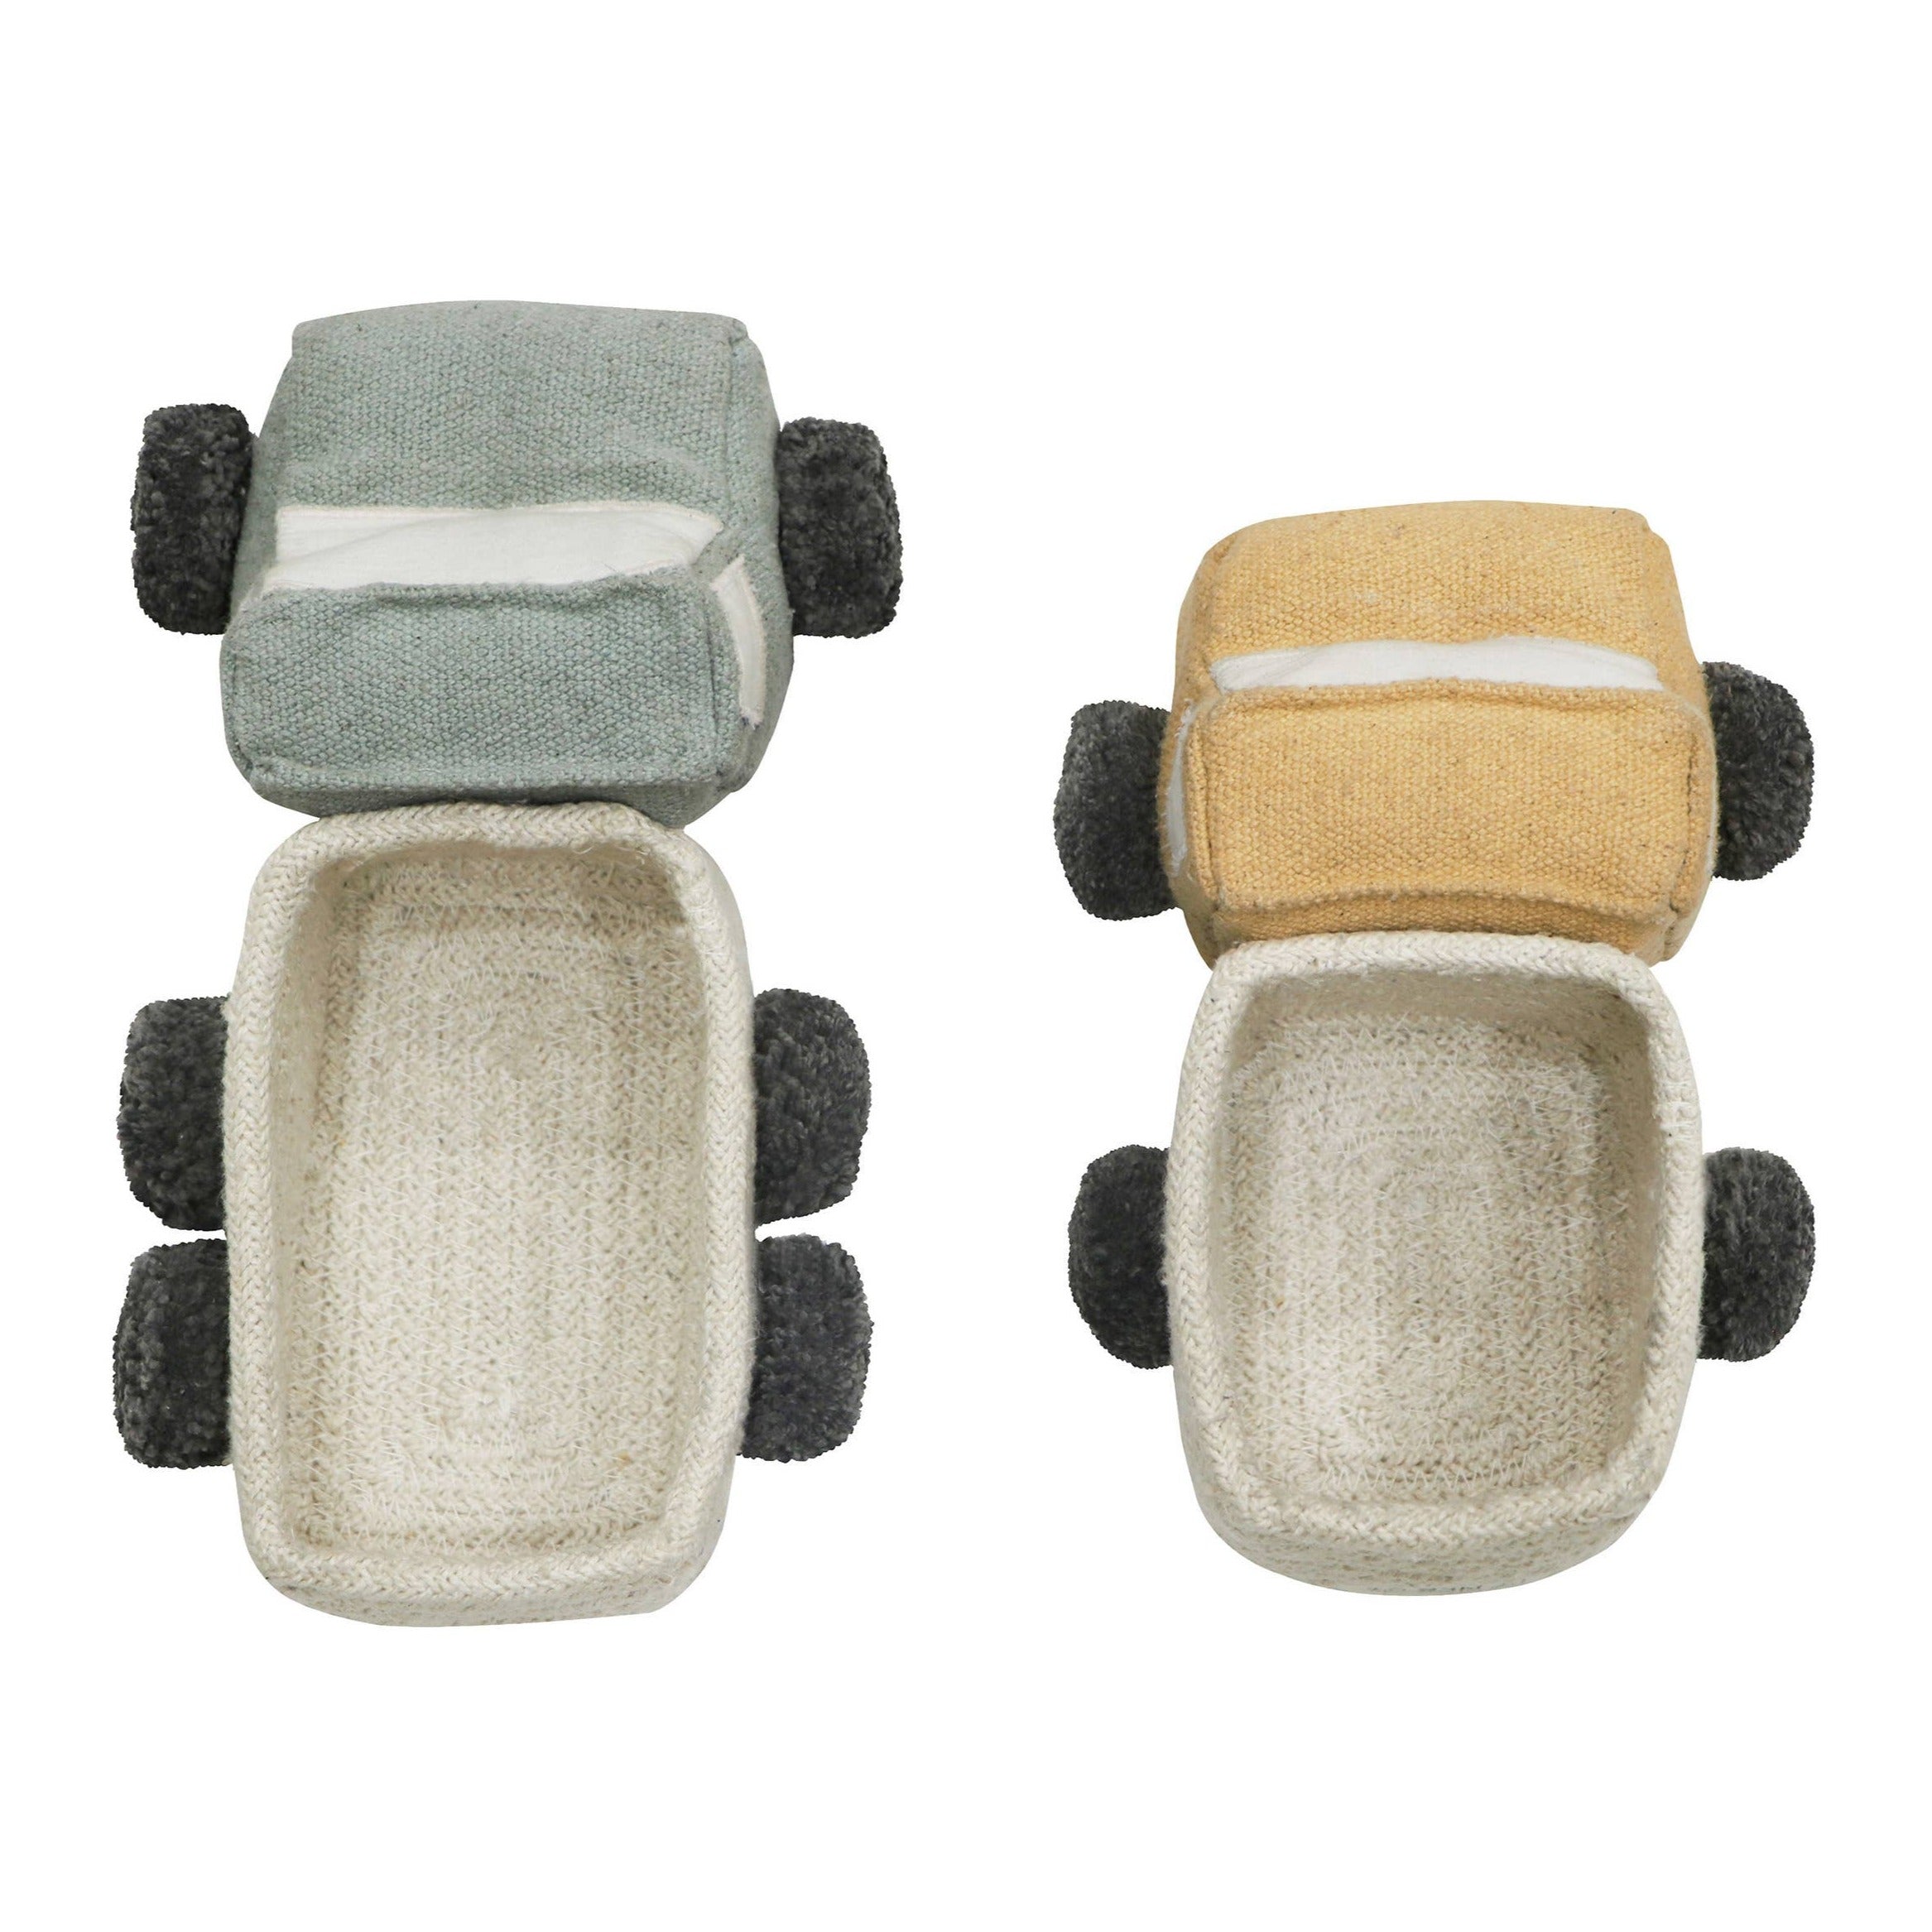 Truck Mini Baskets (Set of 2)